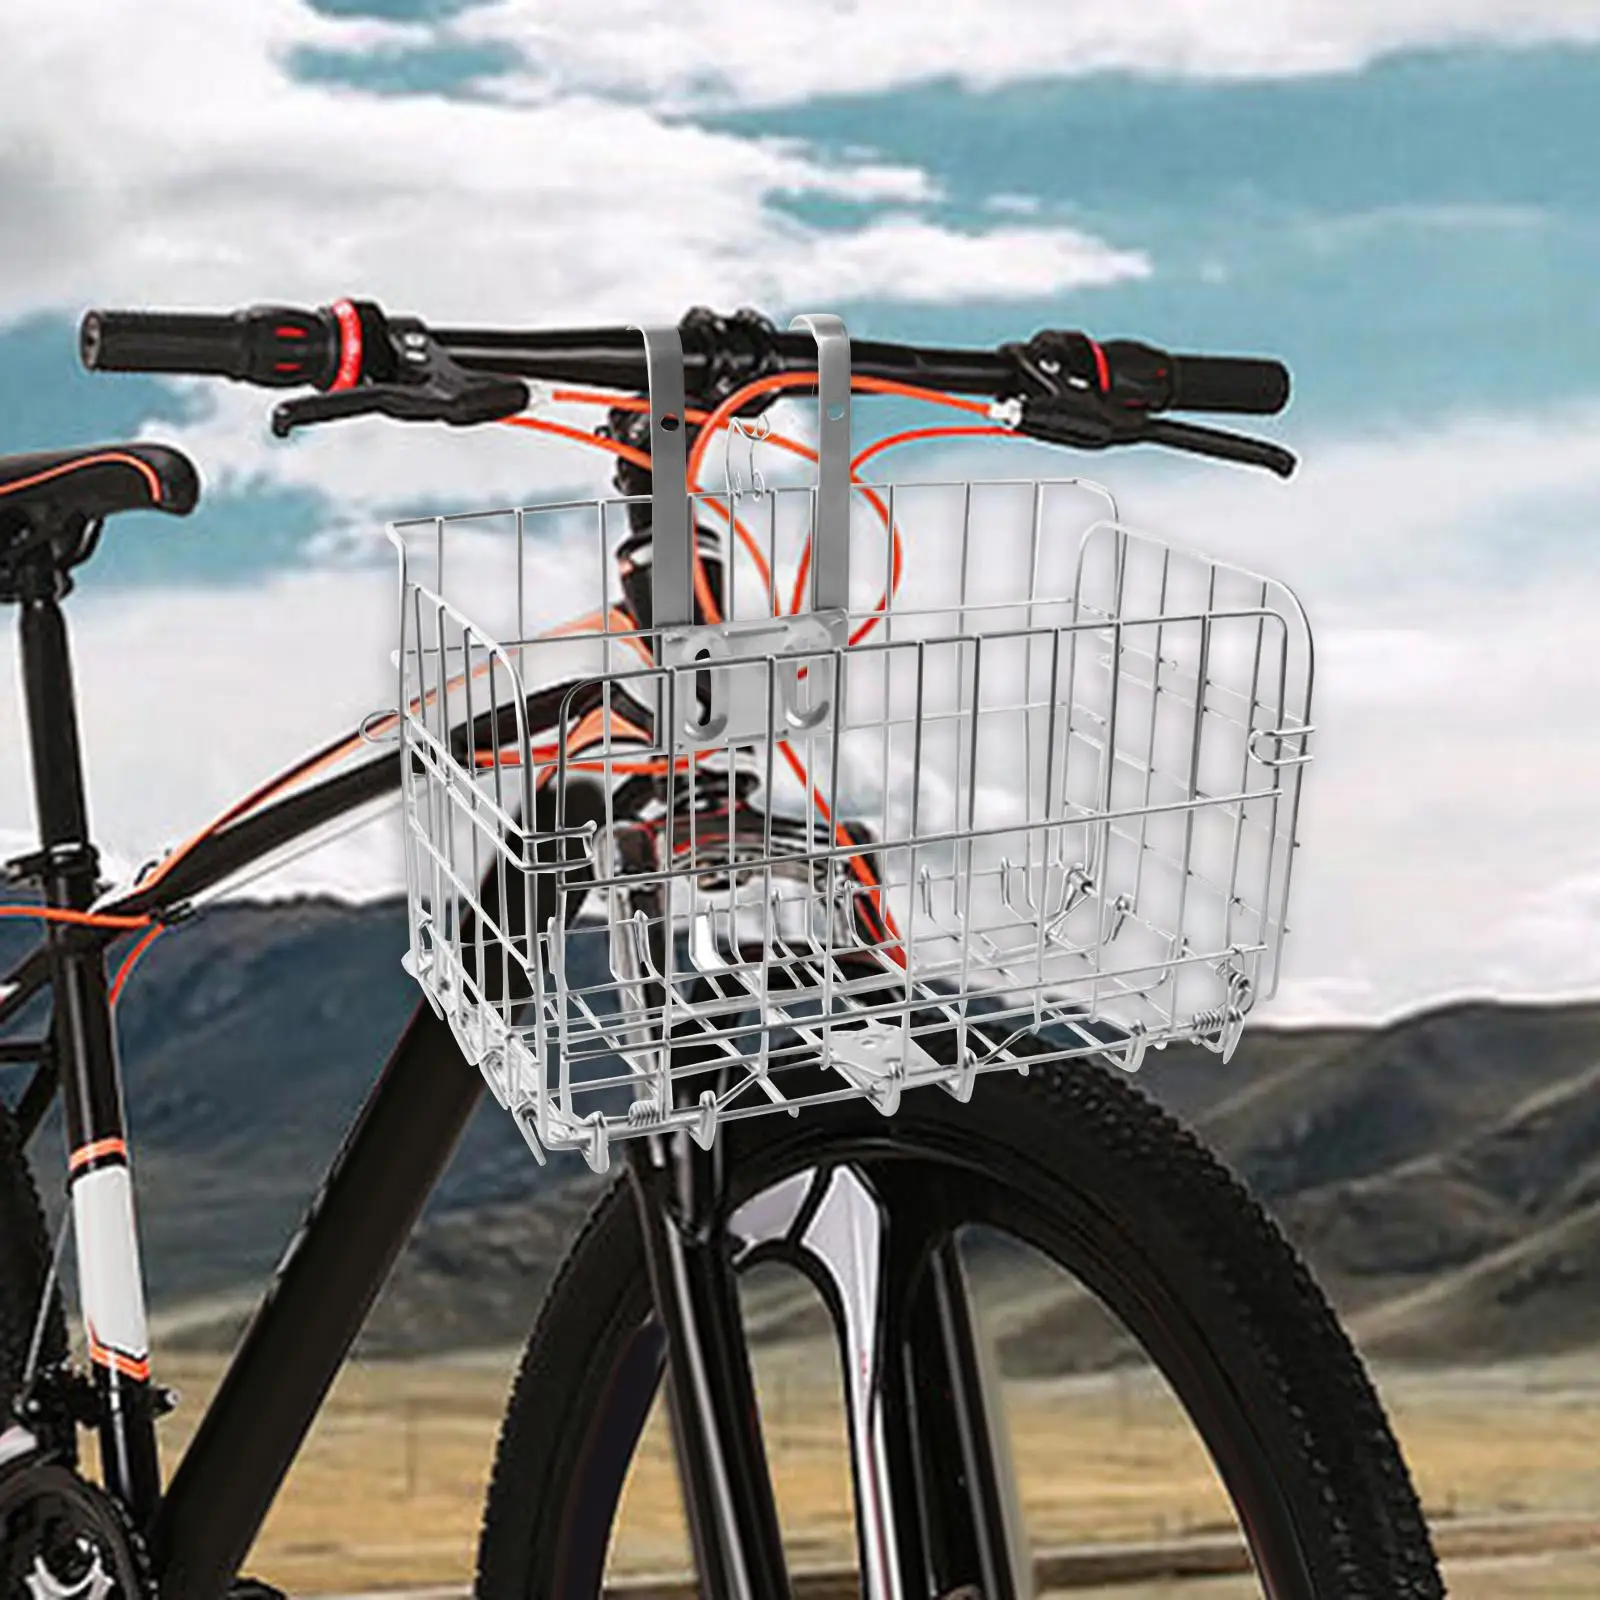 Thicken Metal Front Handlebar Bike Basket Detachable Versatile Heavy Duty